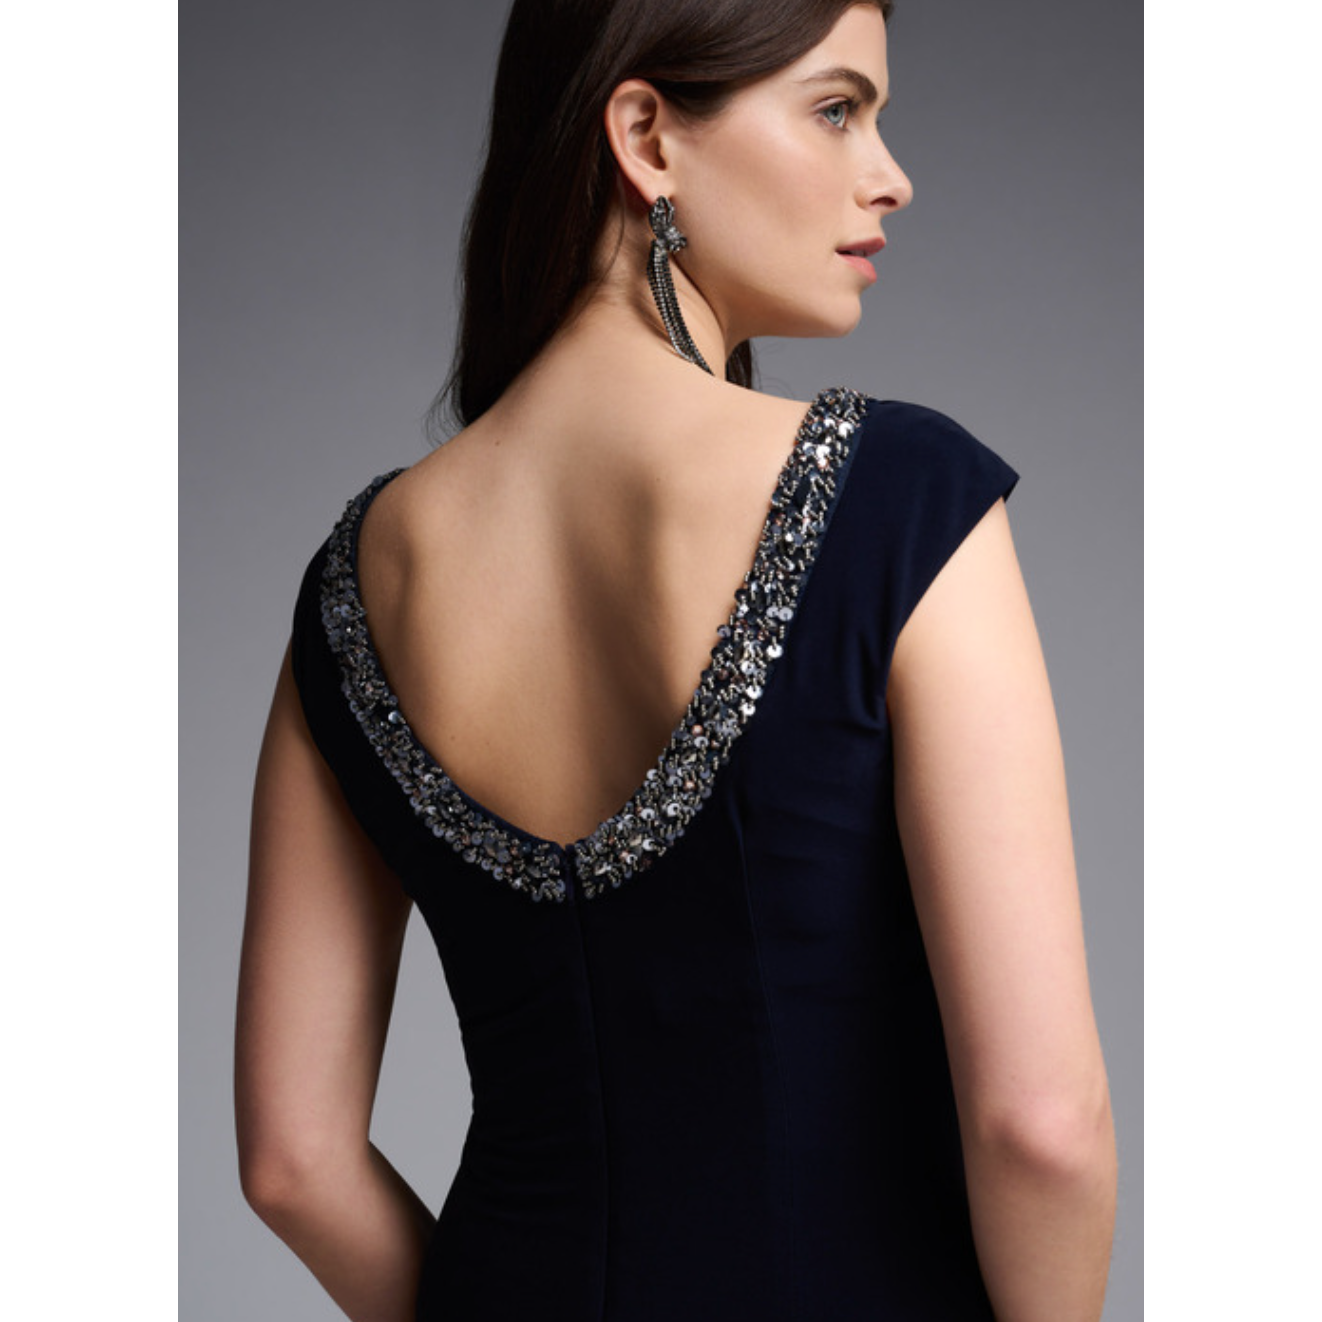 Joseph Ribkoff Embellished Neckline Midnight Blue Dress 231709